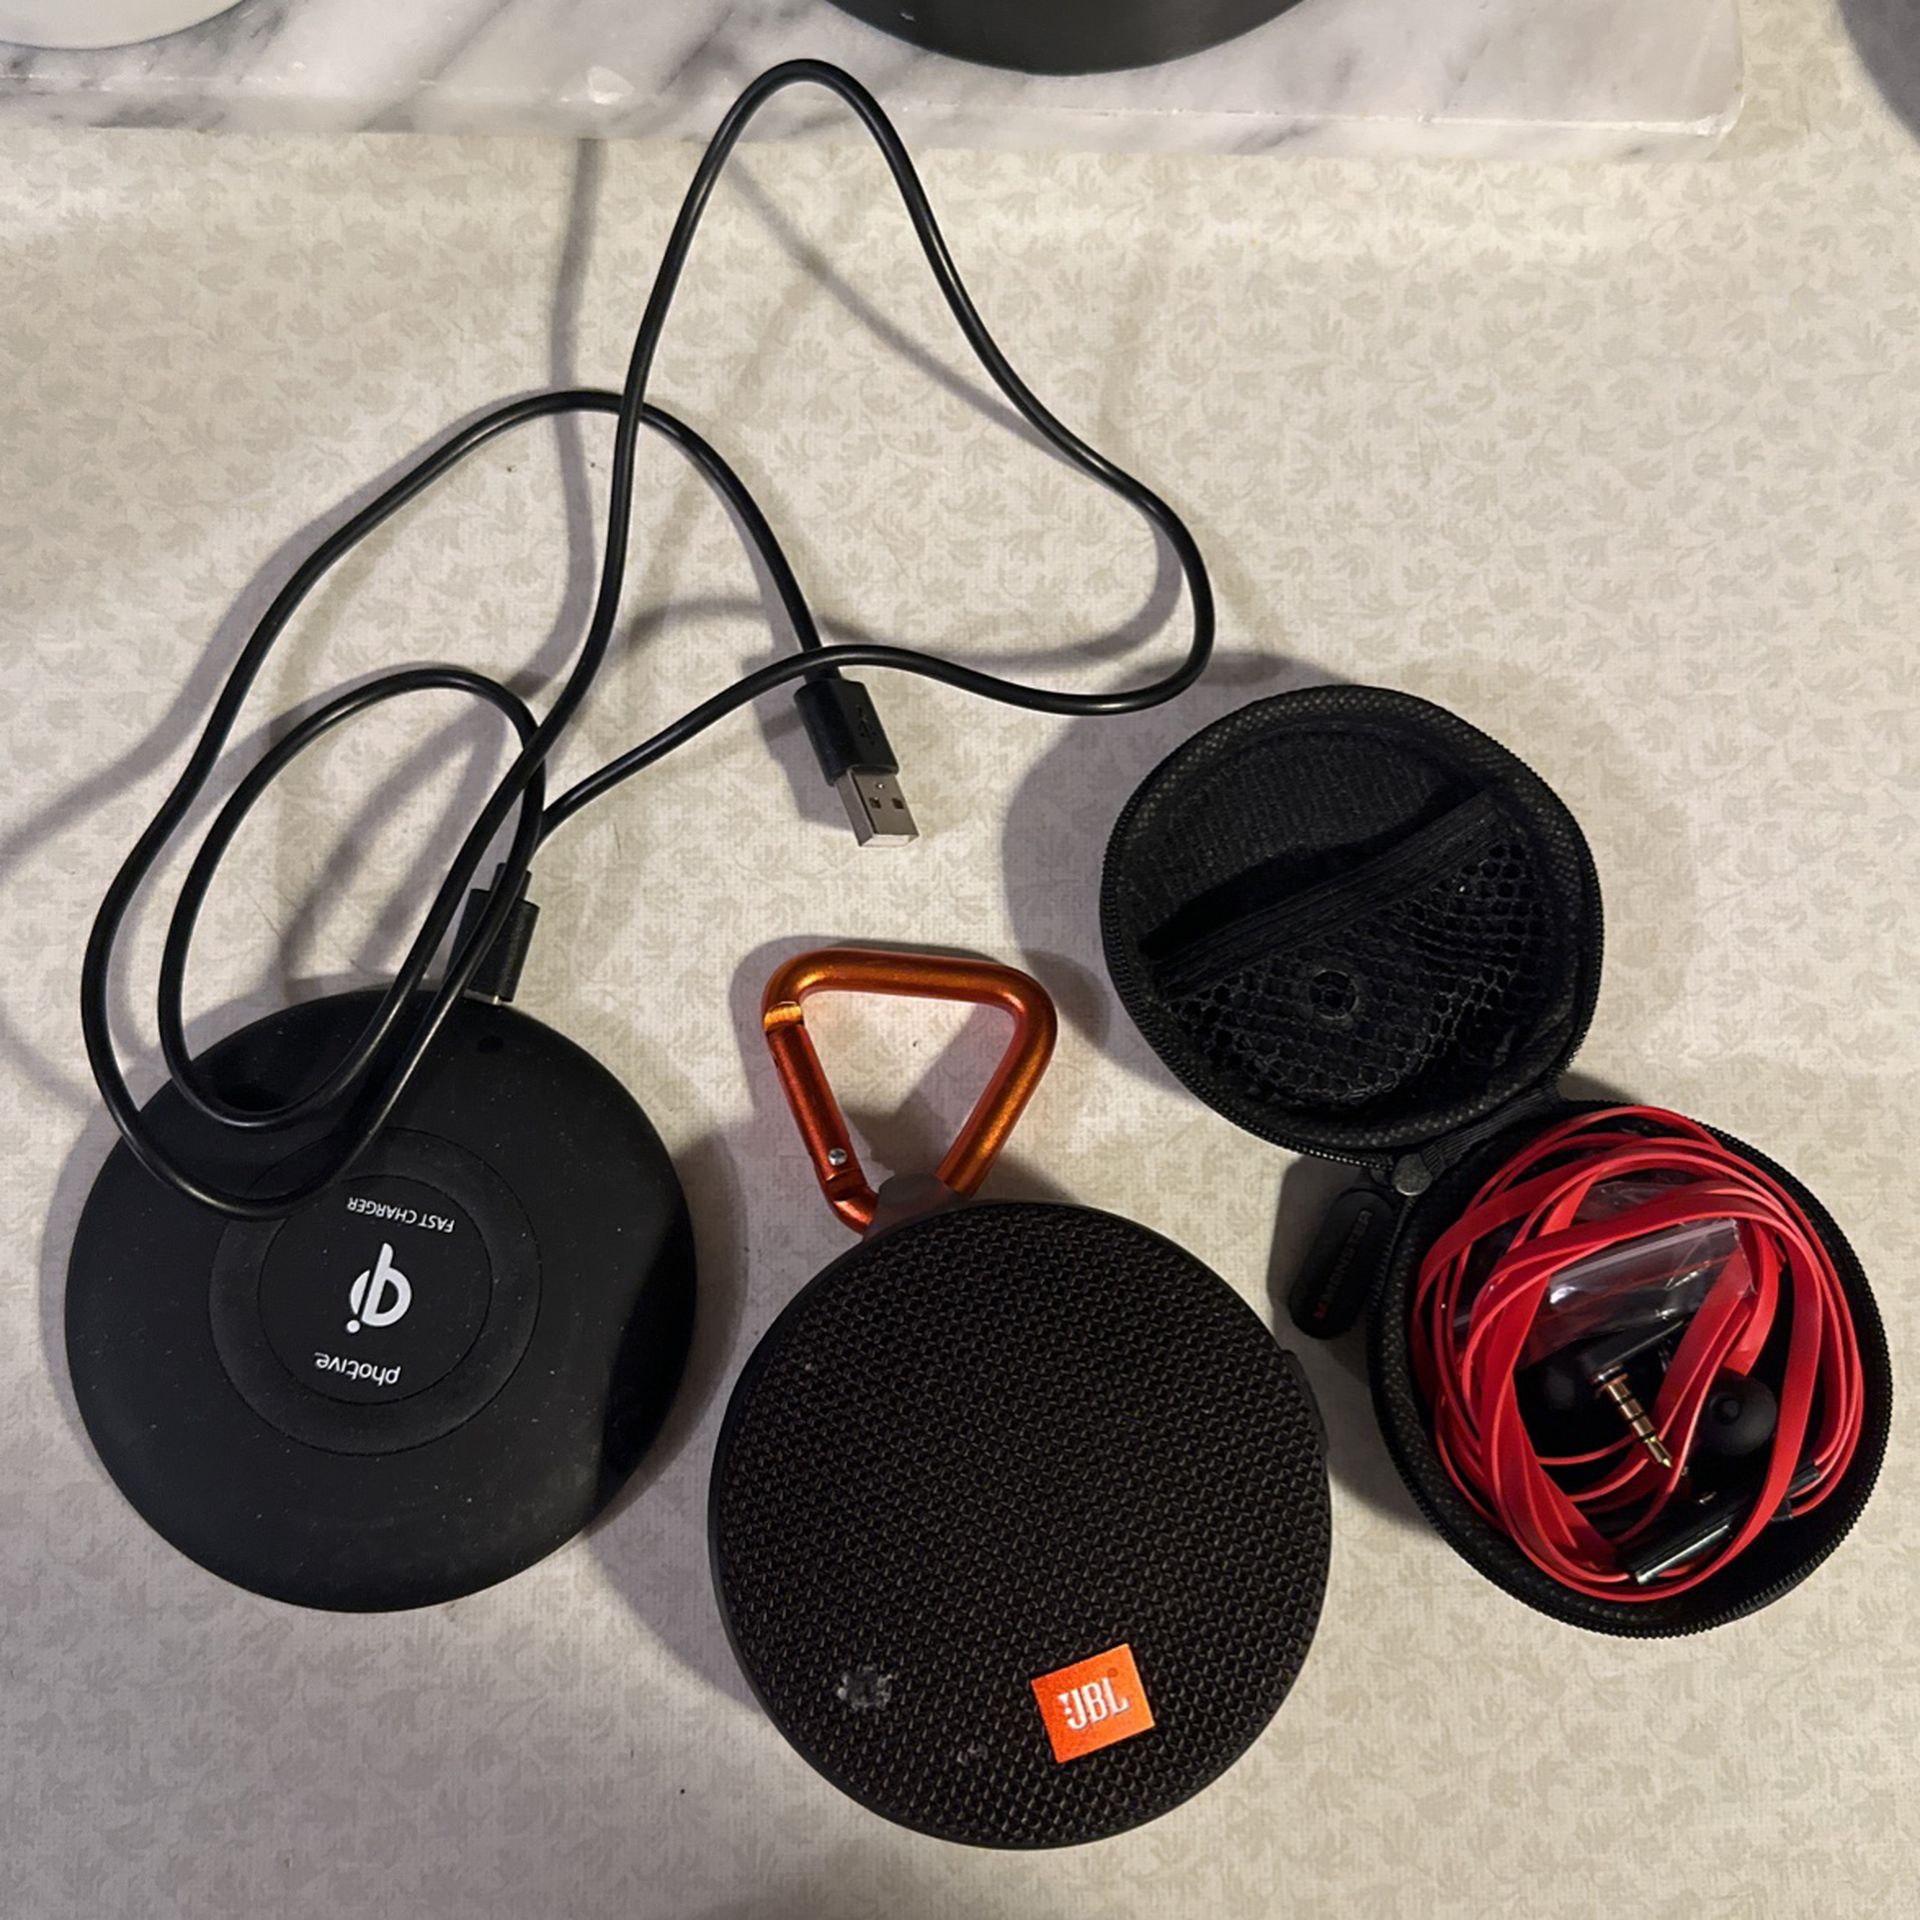 3 ITEMS -   Wireless Charger , JBL Speaker, BEATS  AUX headphones.  